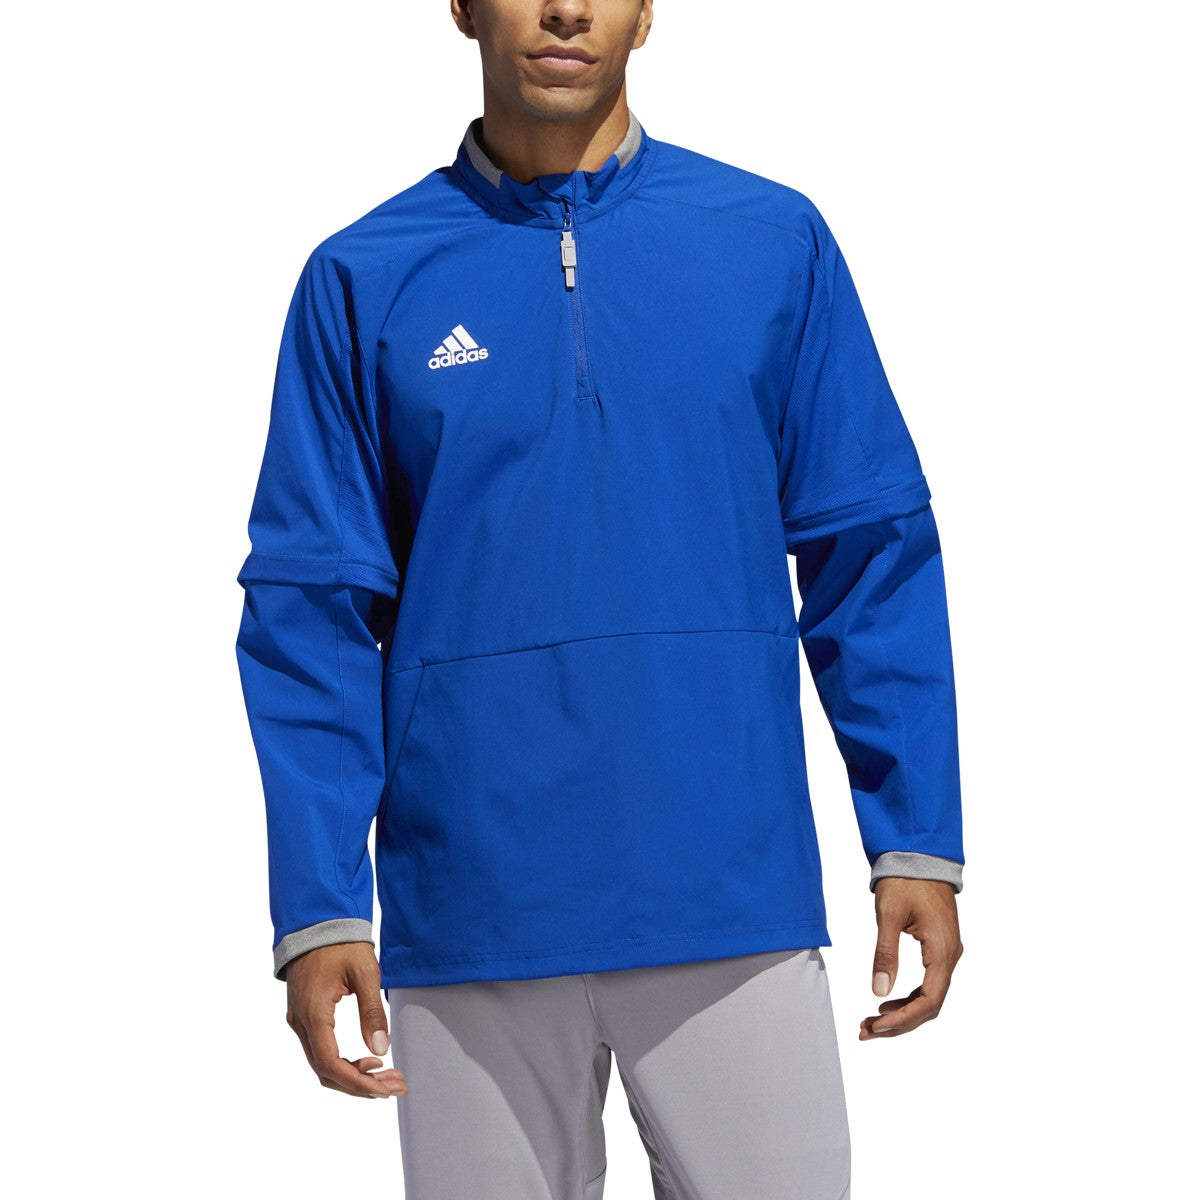 adidas fielder's choice jacket